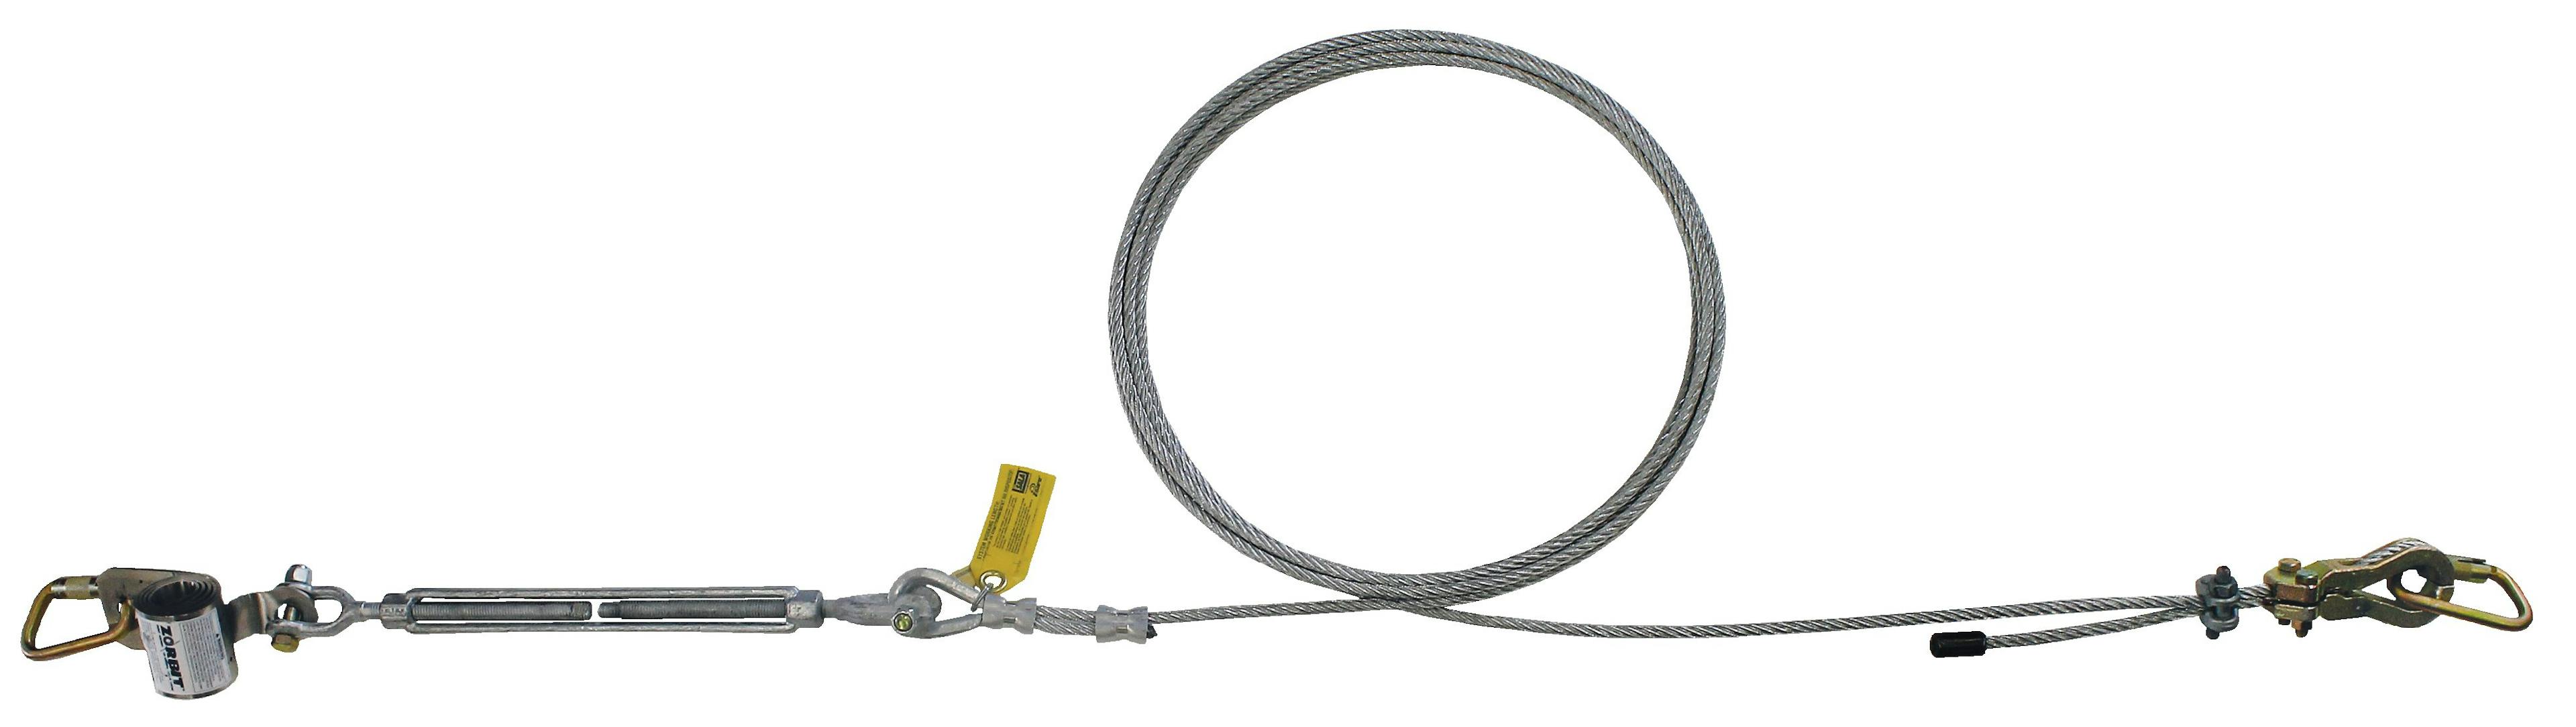 3M™ DBI-SALA® SecuraSpan™ Temporary Horizontal Lifeline System Cable Assembly 7403050, 1 EA/Case